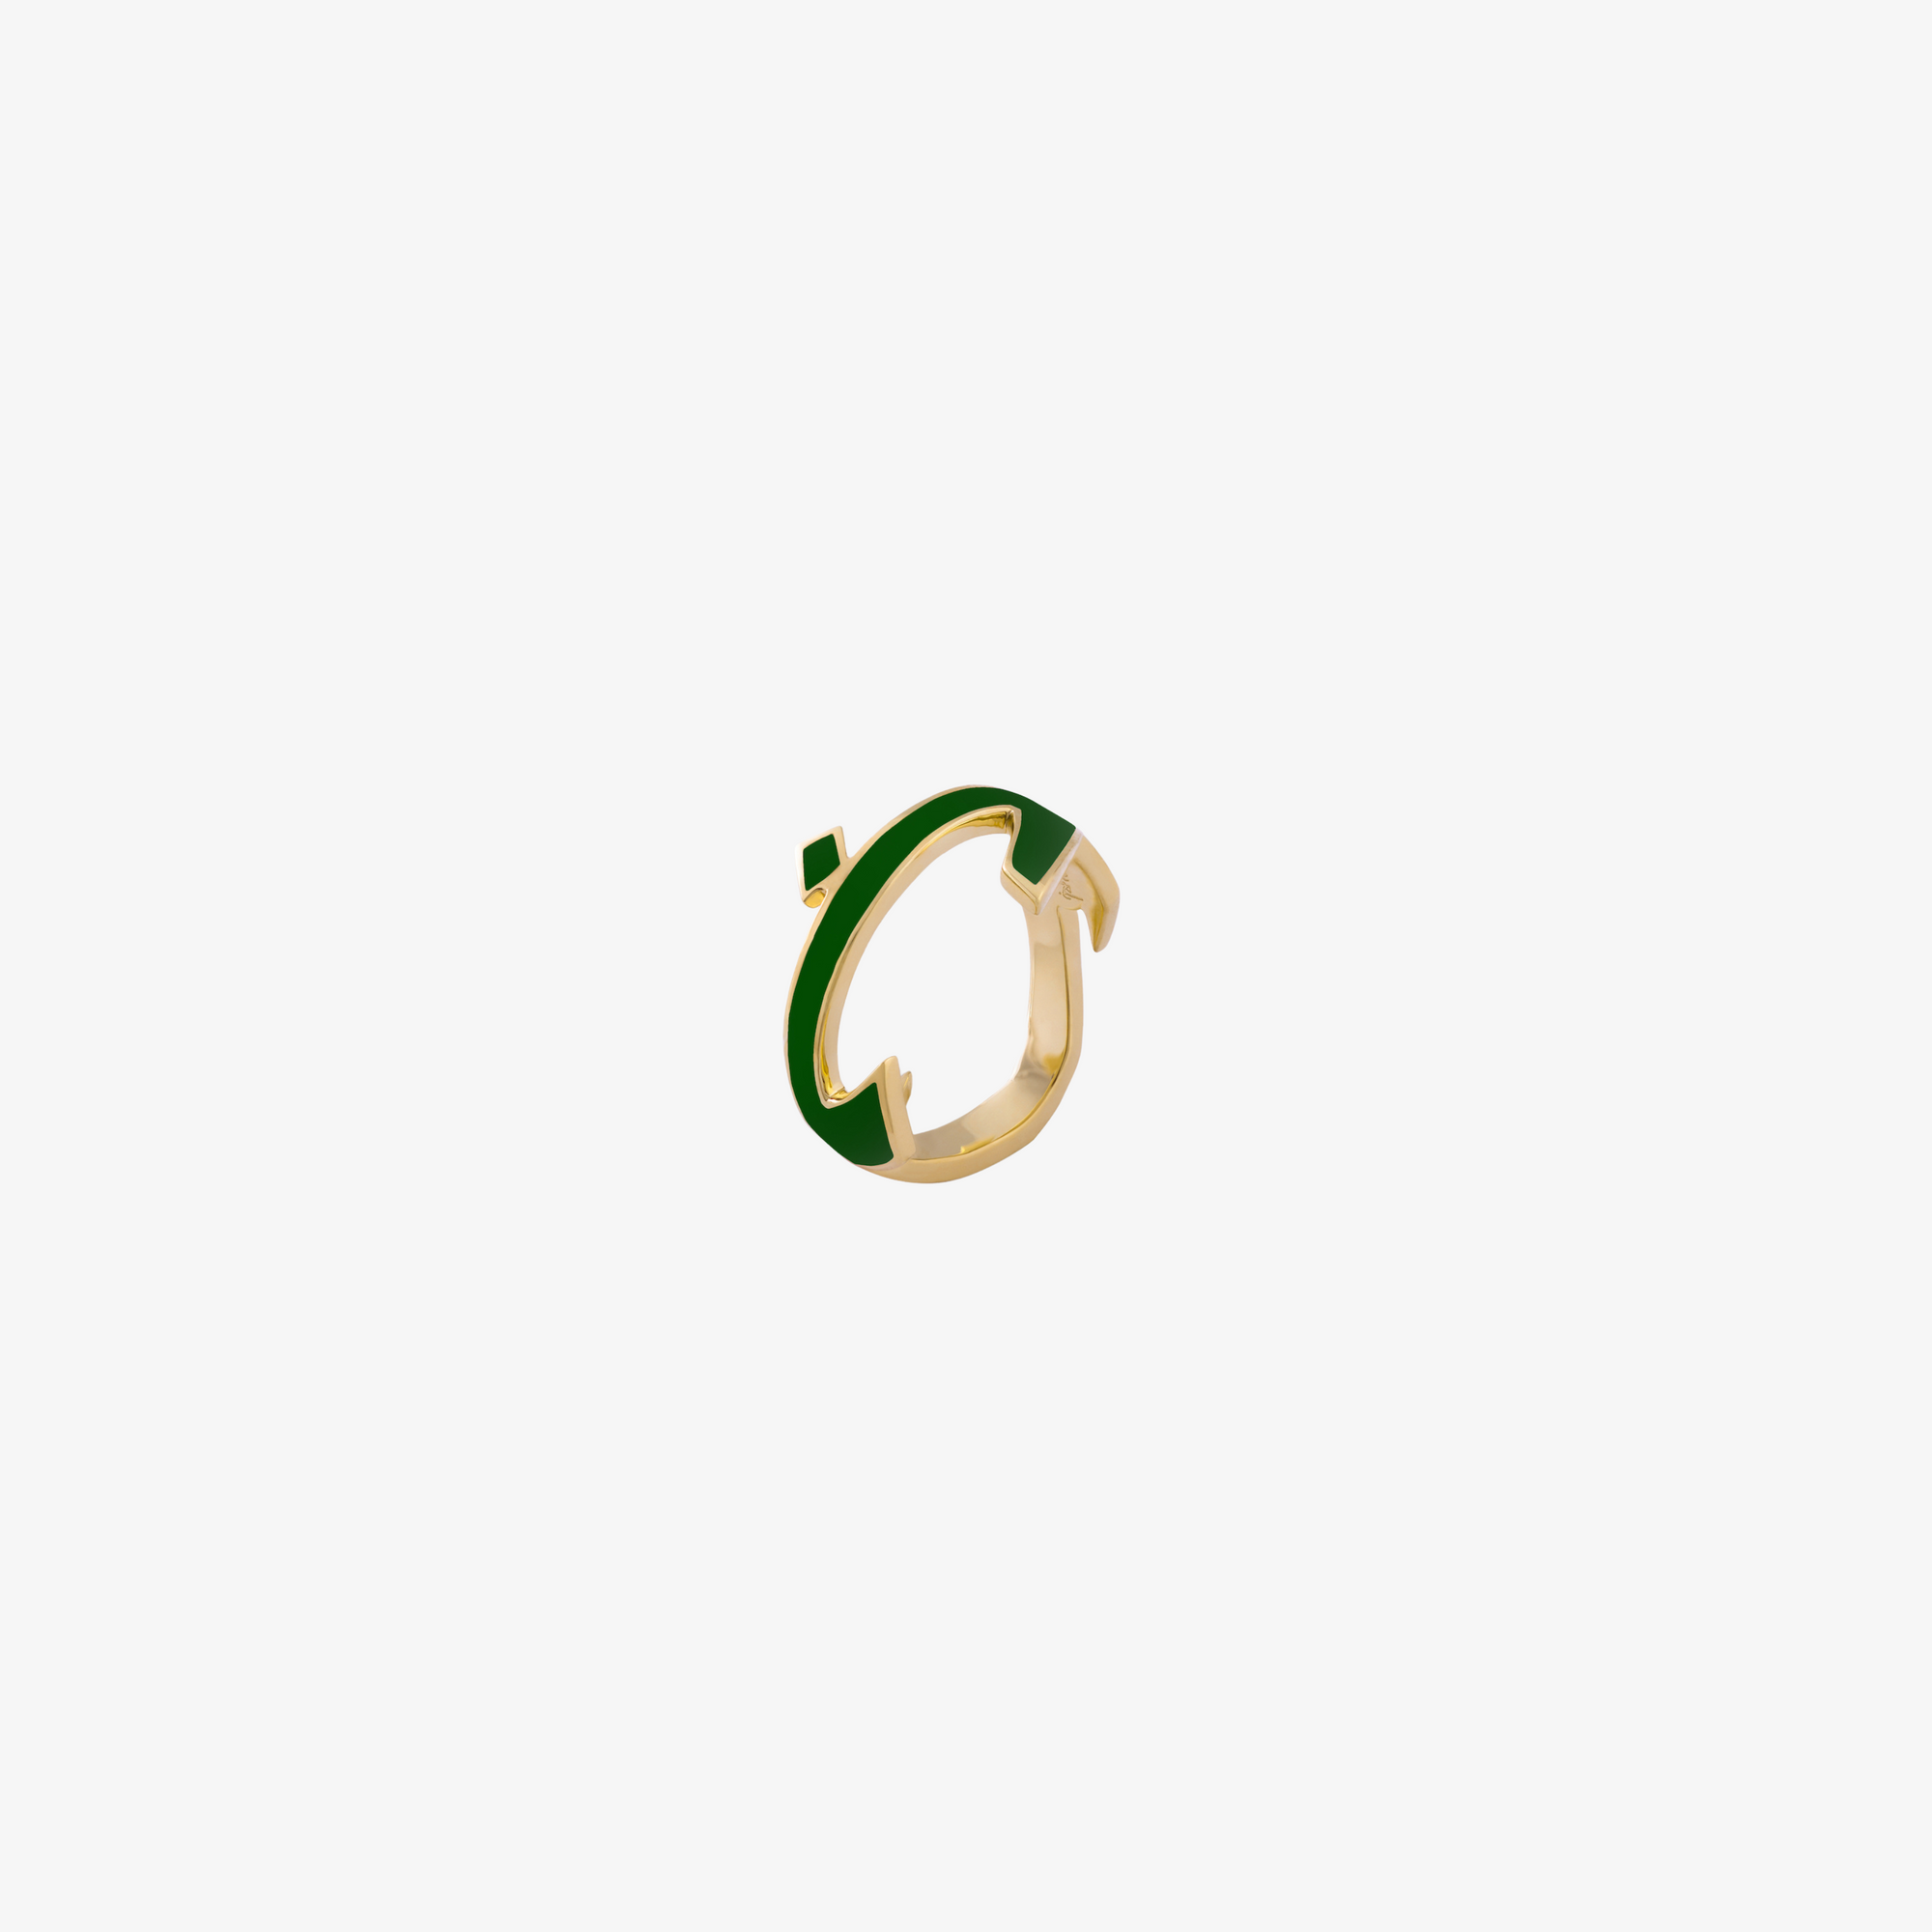 HOBBI - 18K Gold & Enamel "Love" Ring